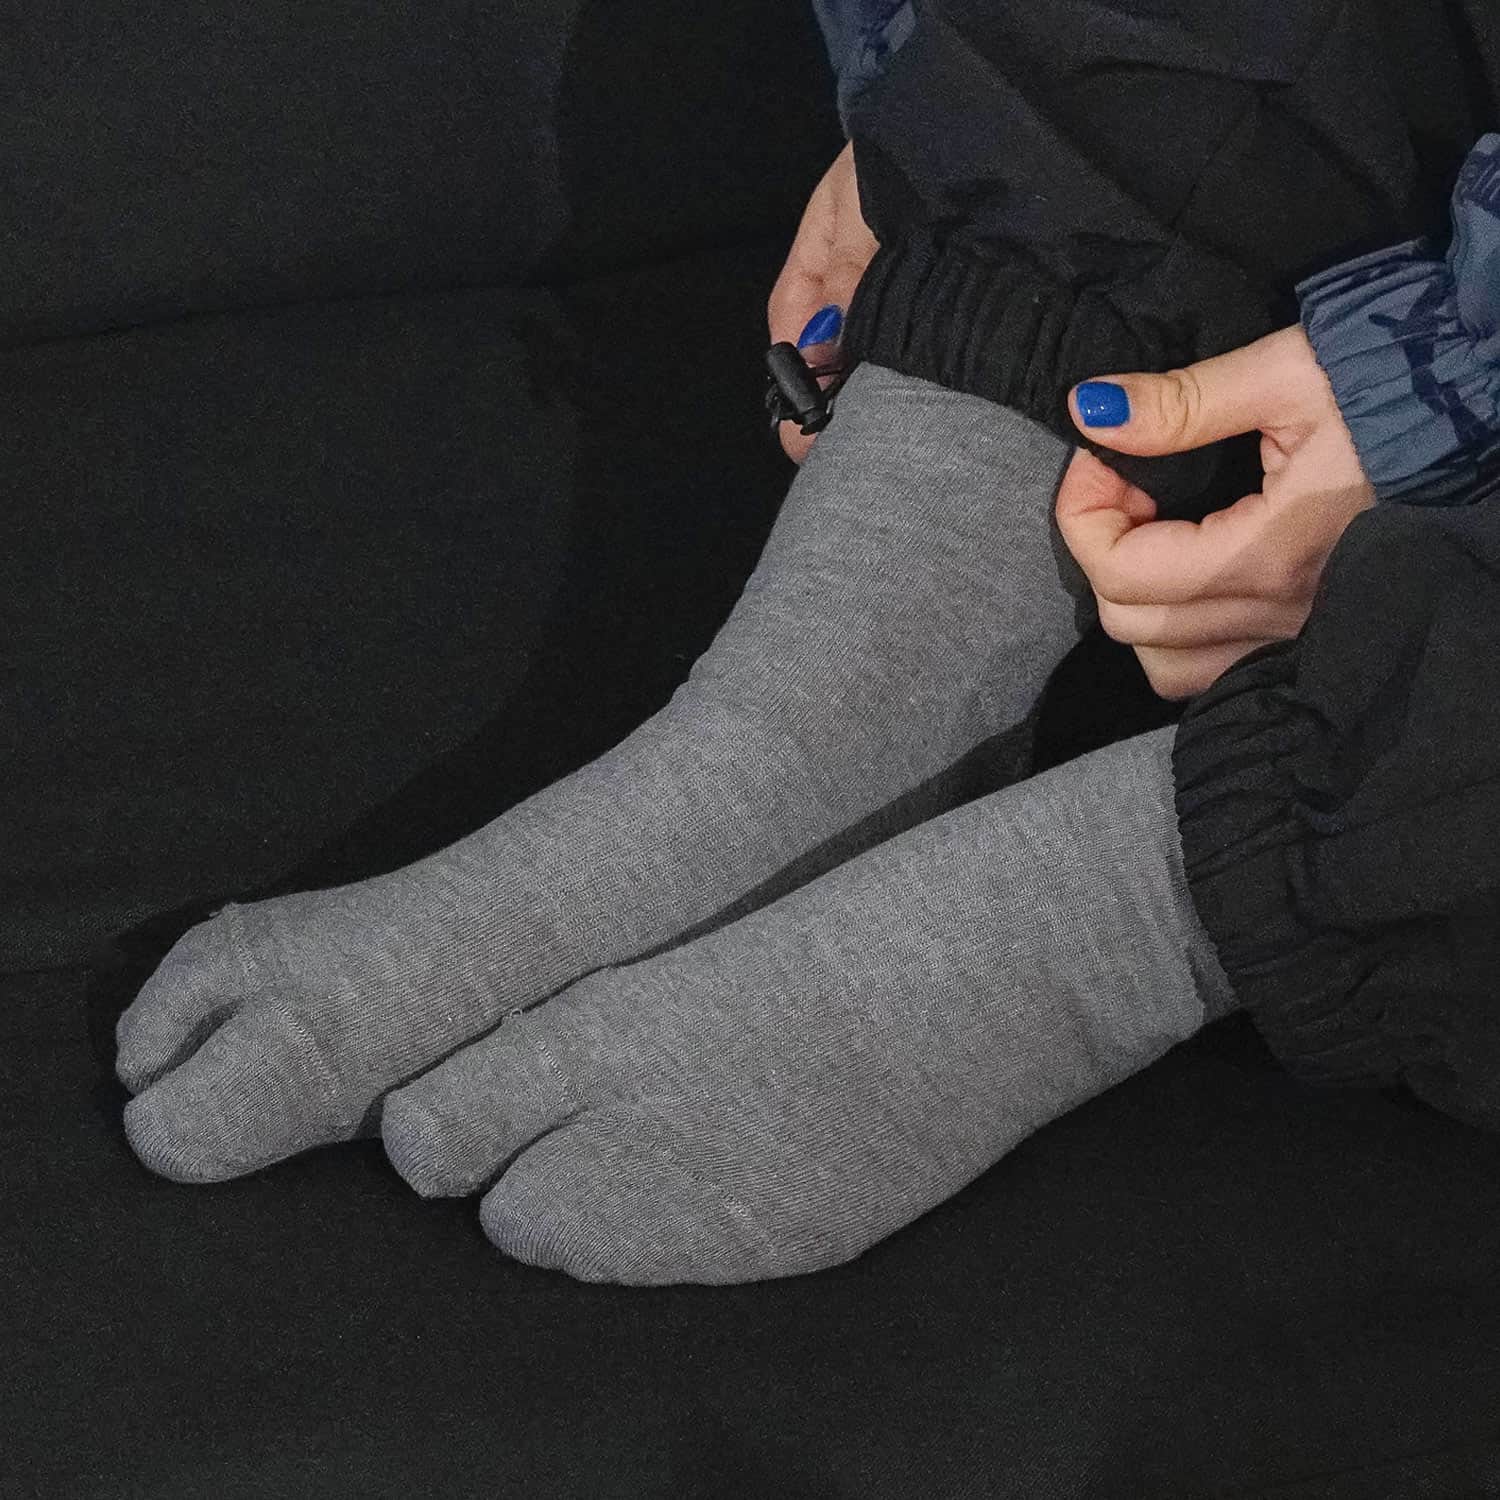 NODAL COOLMAX EcoMade Fiber Socks ノーダル クールマックスエコモードソックス 足袋ソックス 靴下 23.0-27.0cm クルーソックス サンダル スニーカー 革靴 おしゃれ プレゼント レディース メンズ 日本製